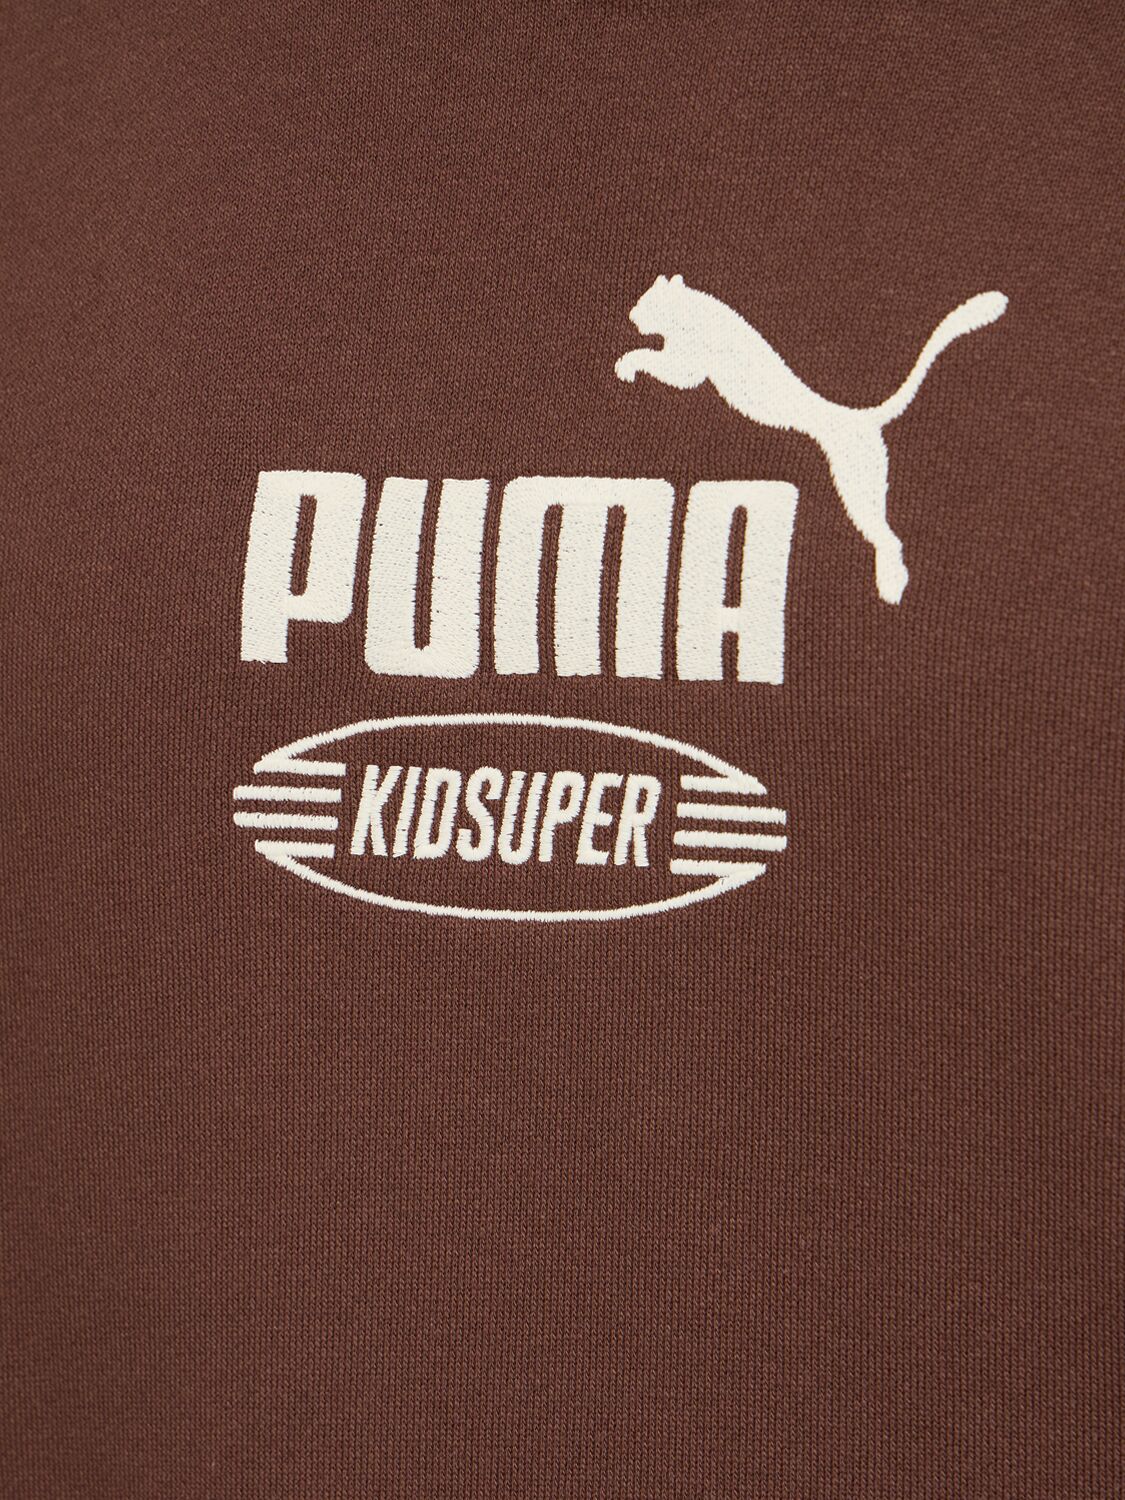 Shop Puma Kidsuper Studios Hooded Sweatshirt In Chesnut Brown